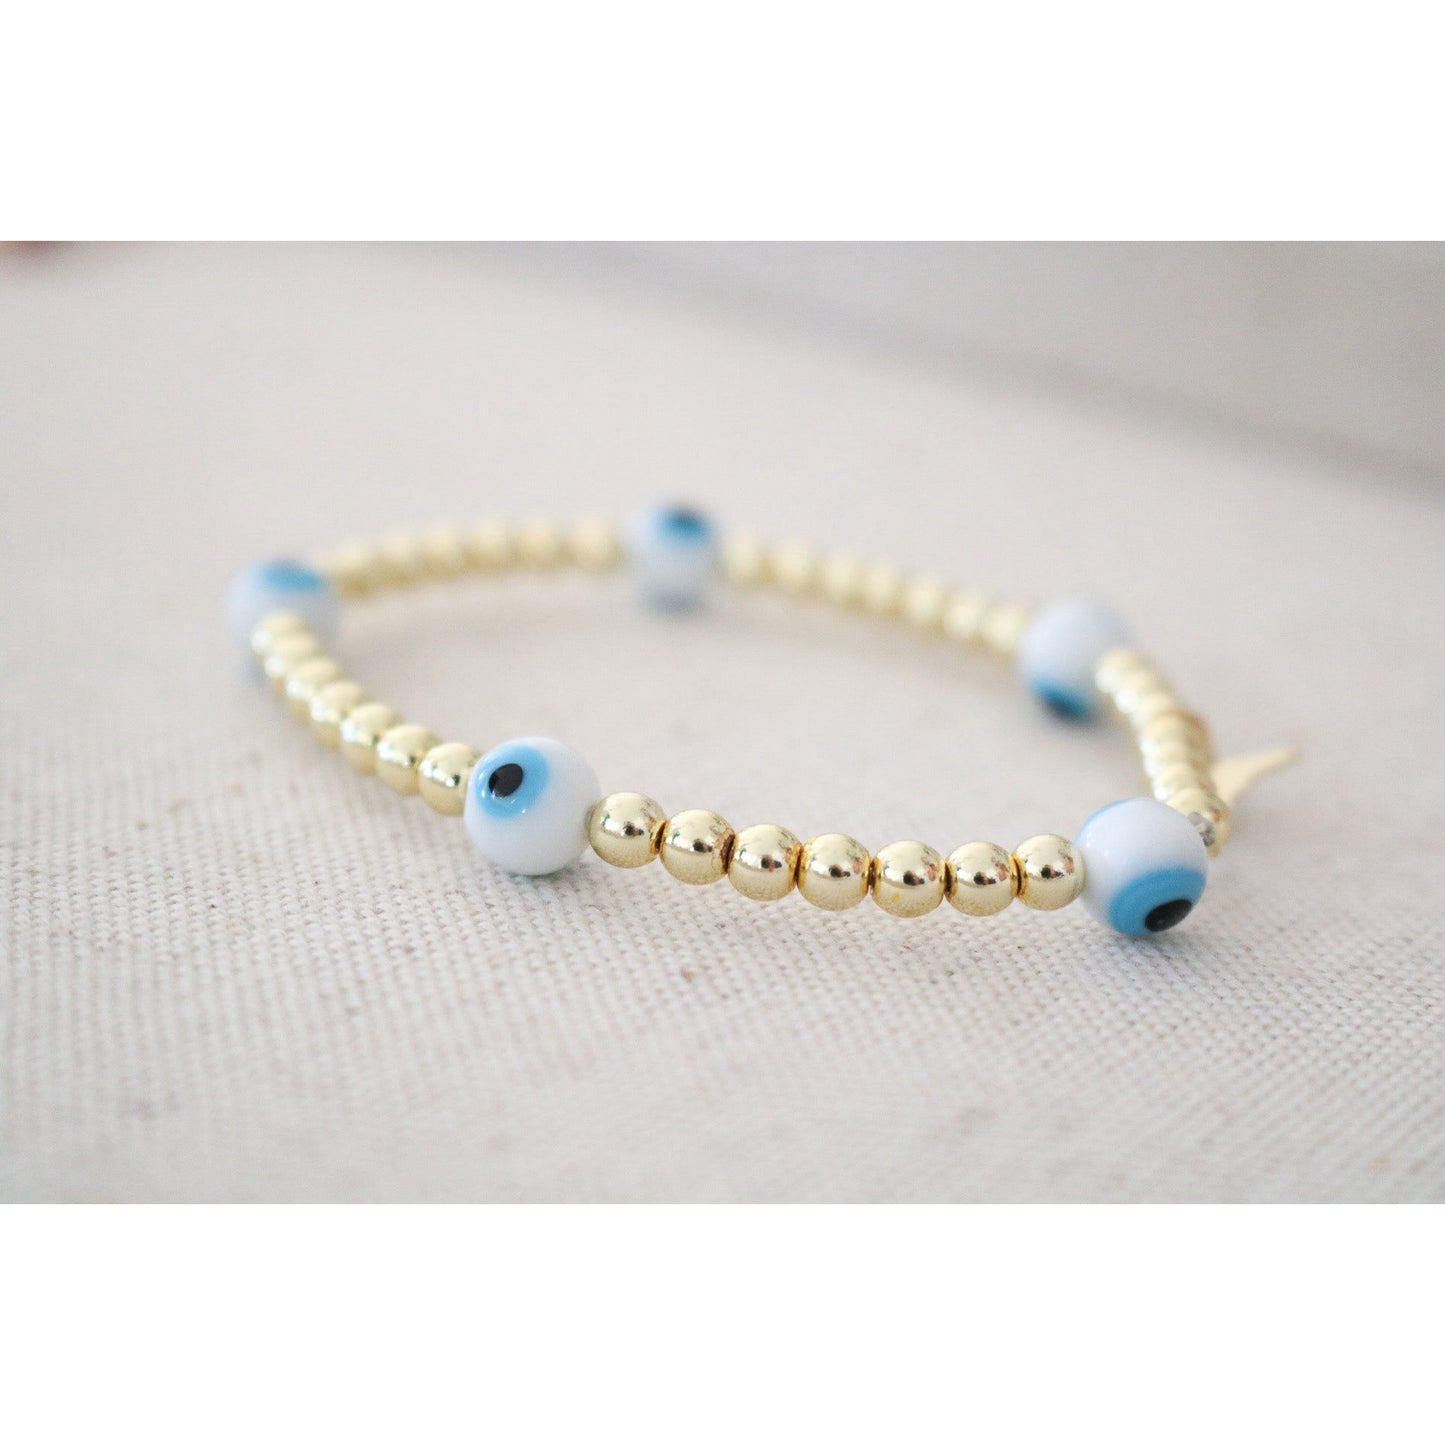 white and blue evil eye beads on a gold hematite stretch bracelet